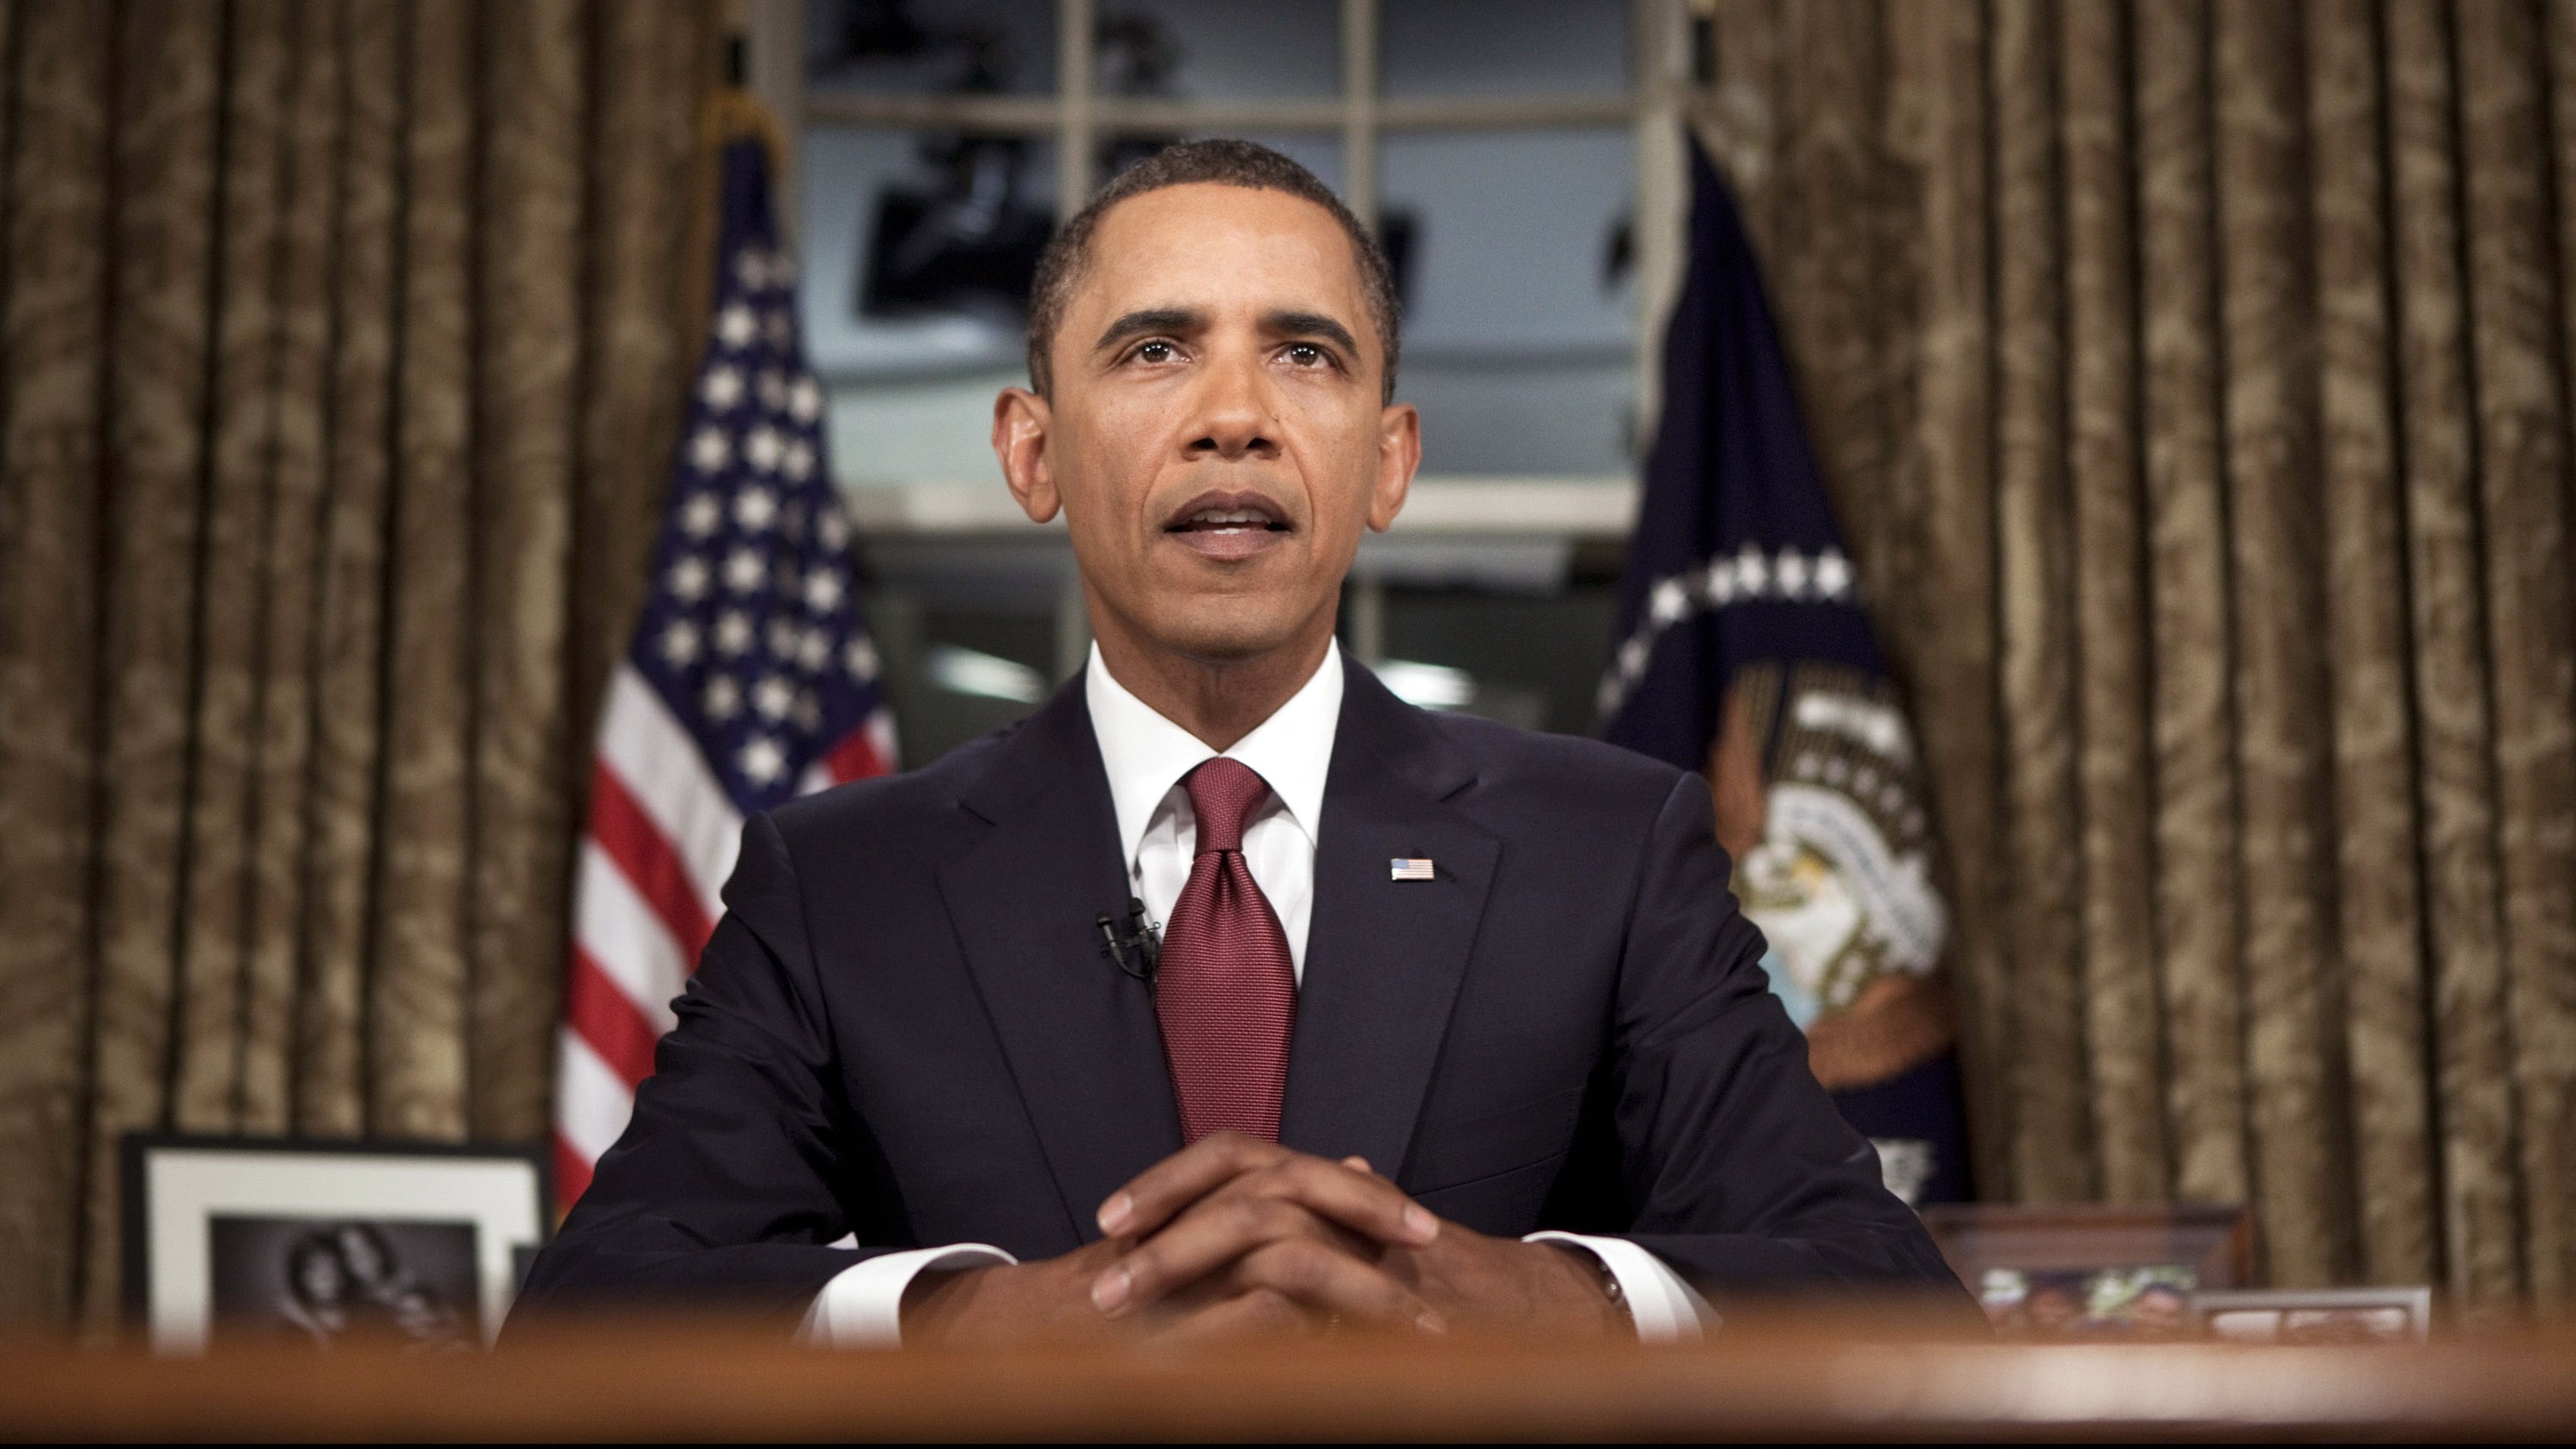 Discurso del Presidente Obama Television, Discurso del Presidente Obama por internet, Discurso del Presidente Obama steam, Discurso del Presidente Obama horario